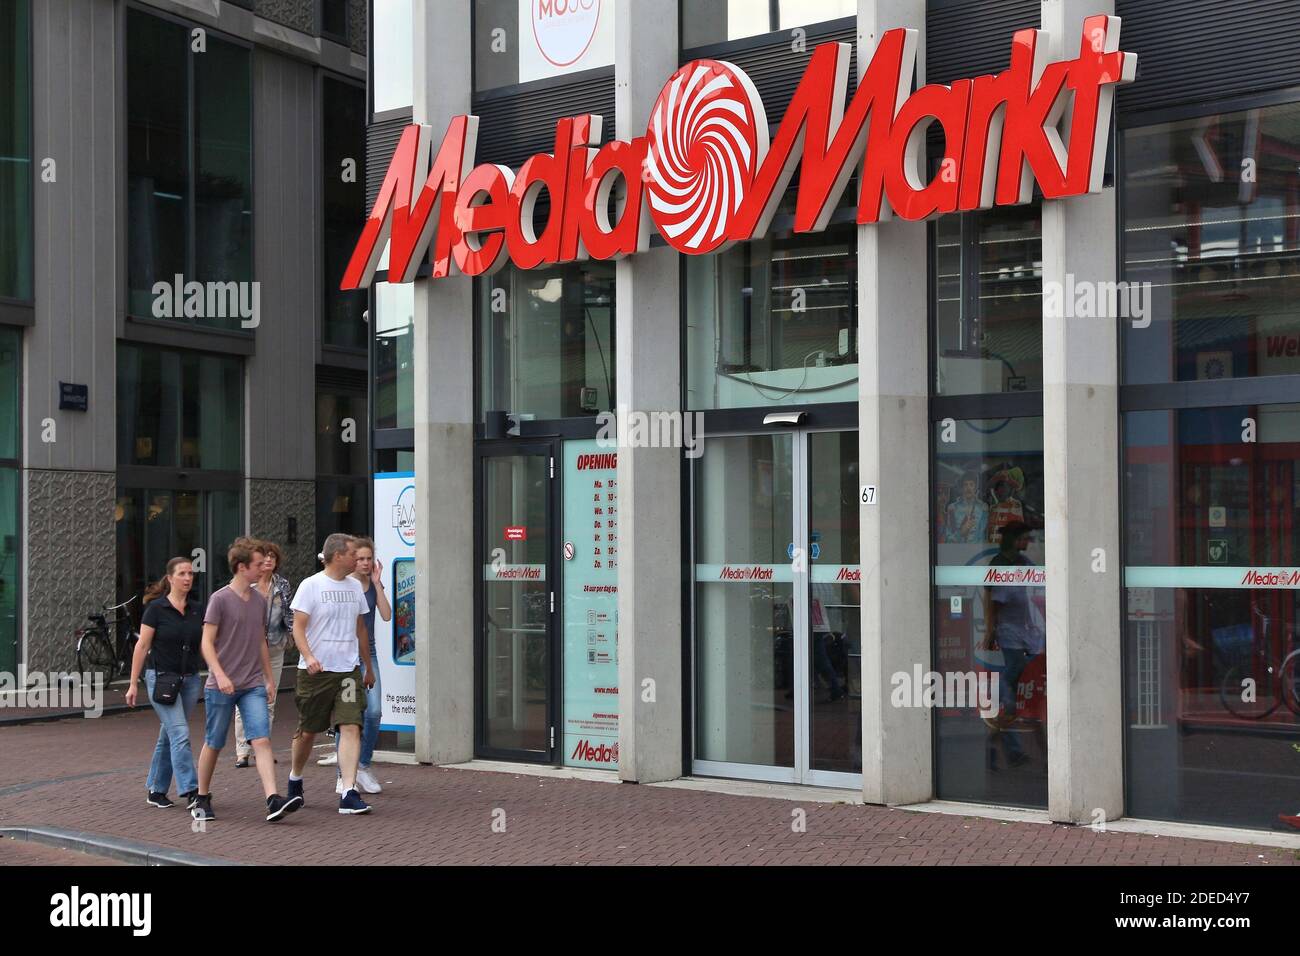 MediaMarkt Amsterdam Centrum - indebuurt Amsterdam